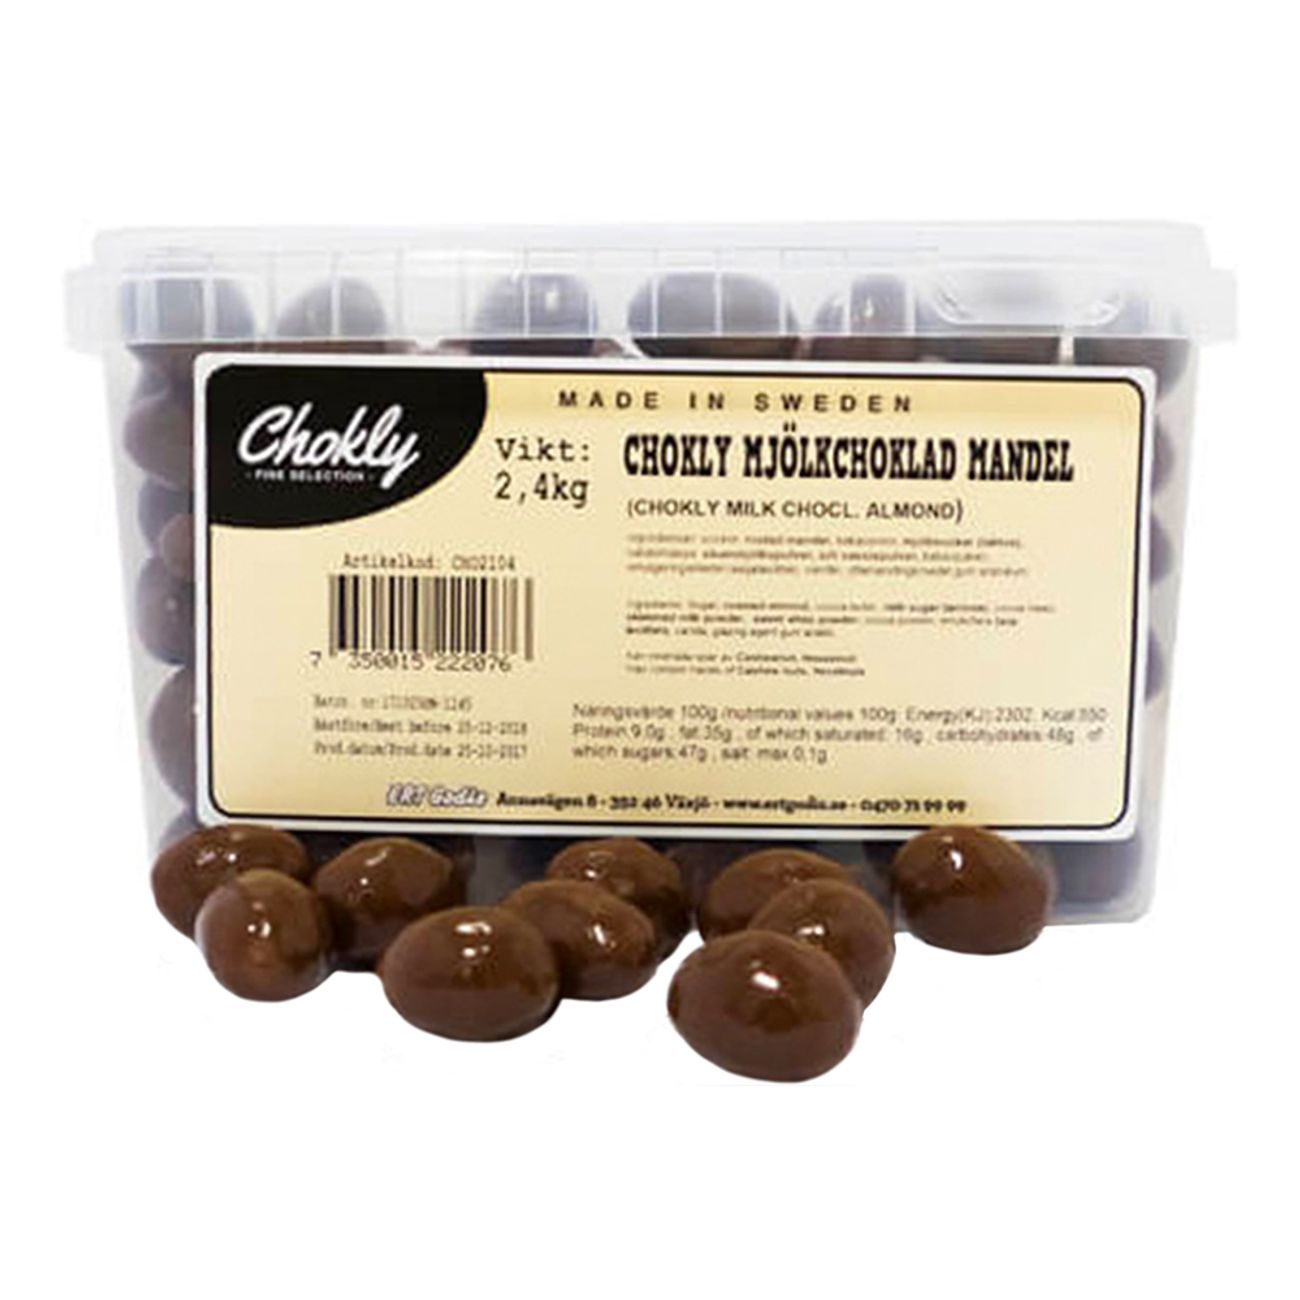 chokly-mjolkchoklad-mandel-storpack-100989-1